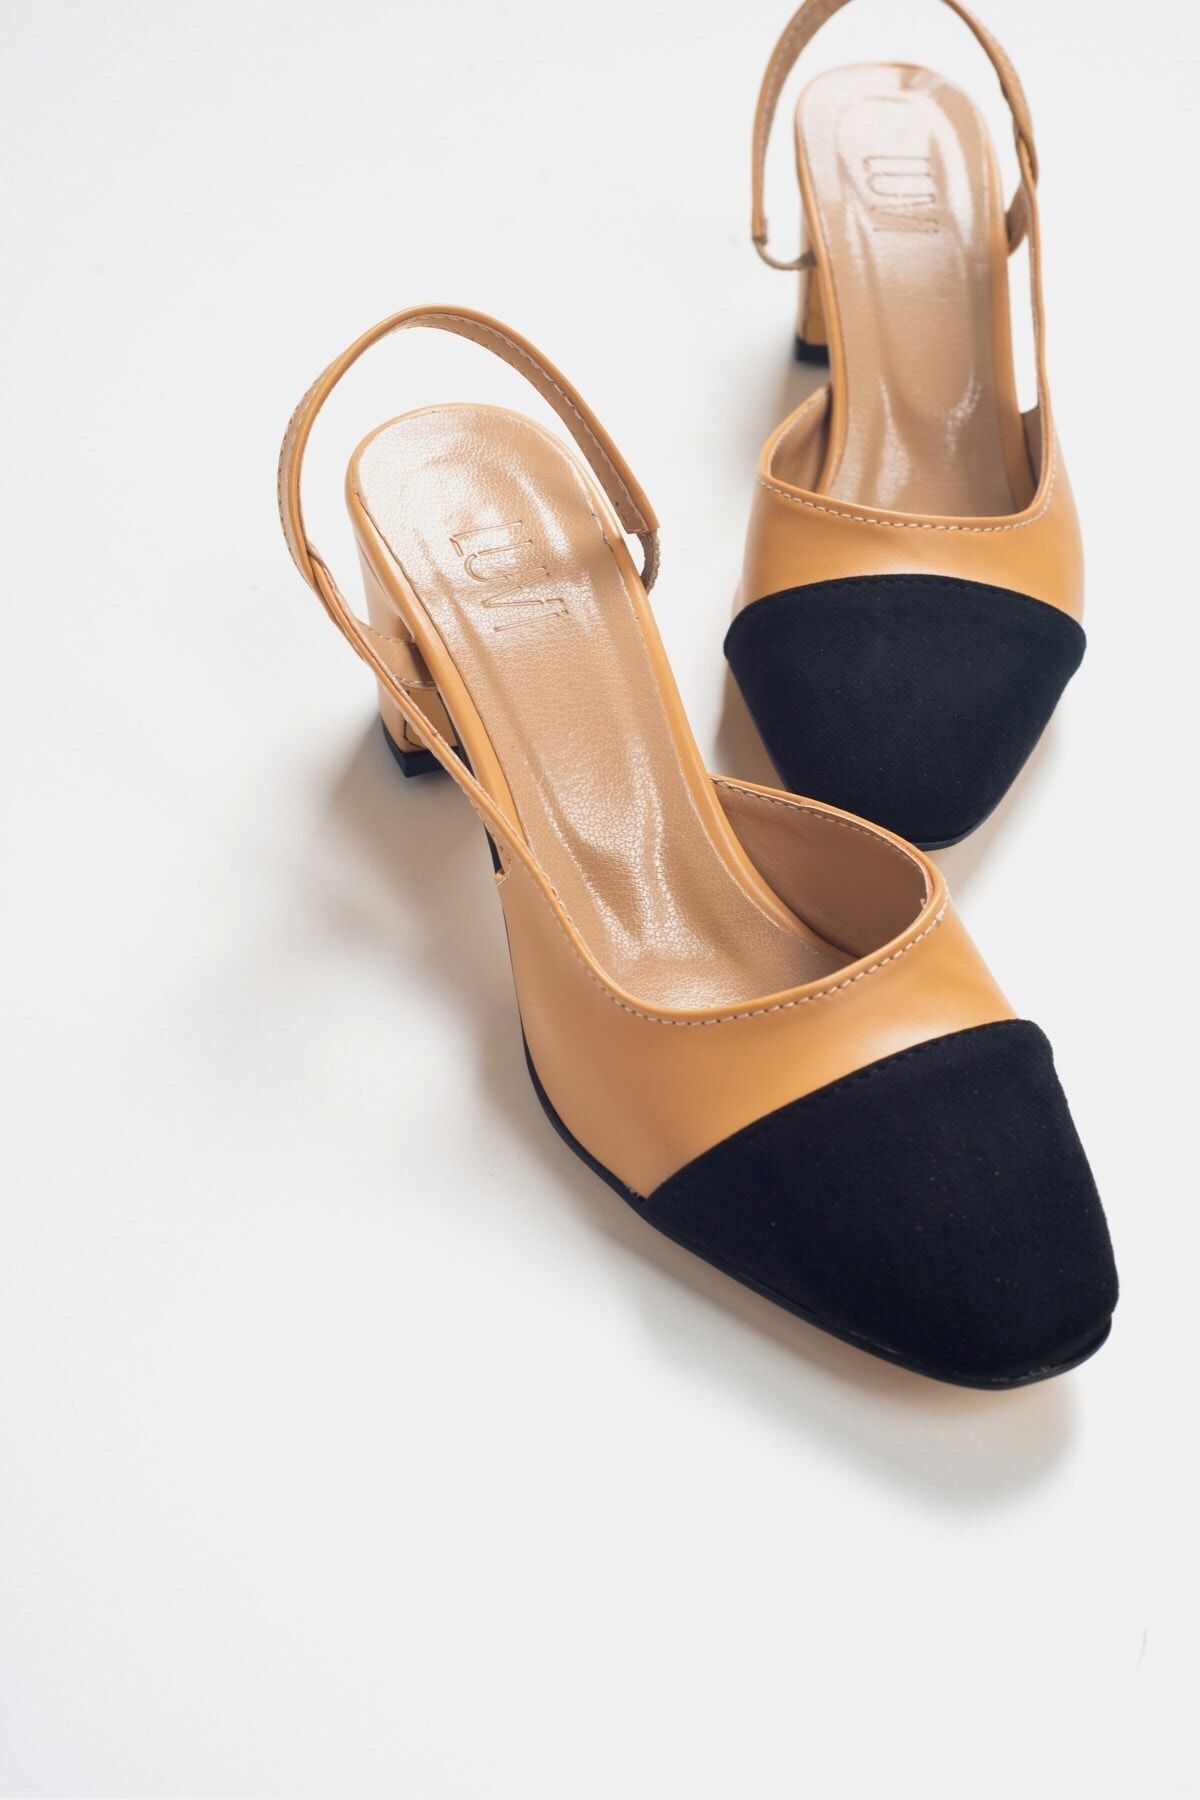 luvishoes Ten Cilt Siyah Süet Kadın Topuklu Ayakkabı